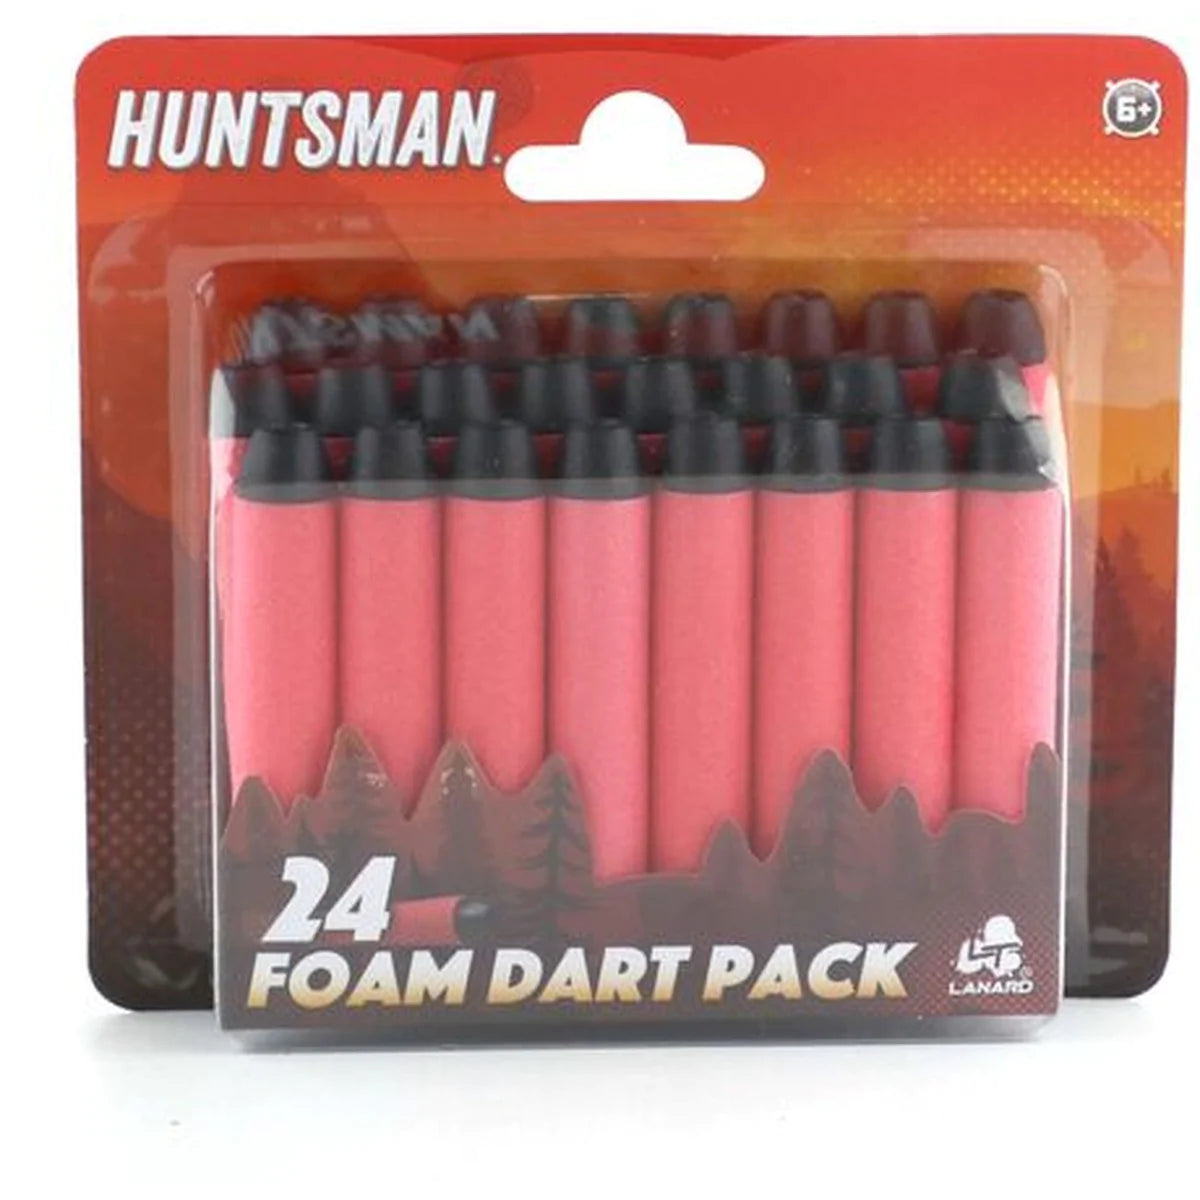 Huntsman Foam Darts 24pk